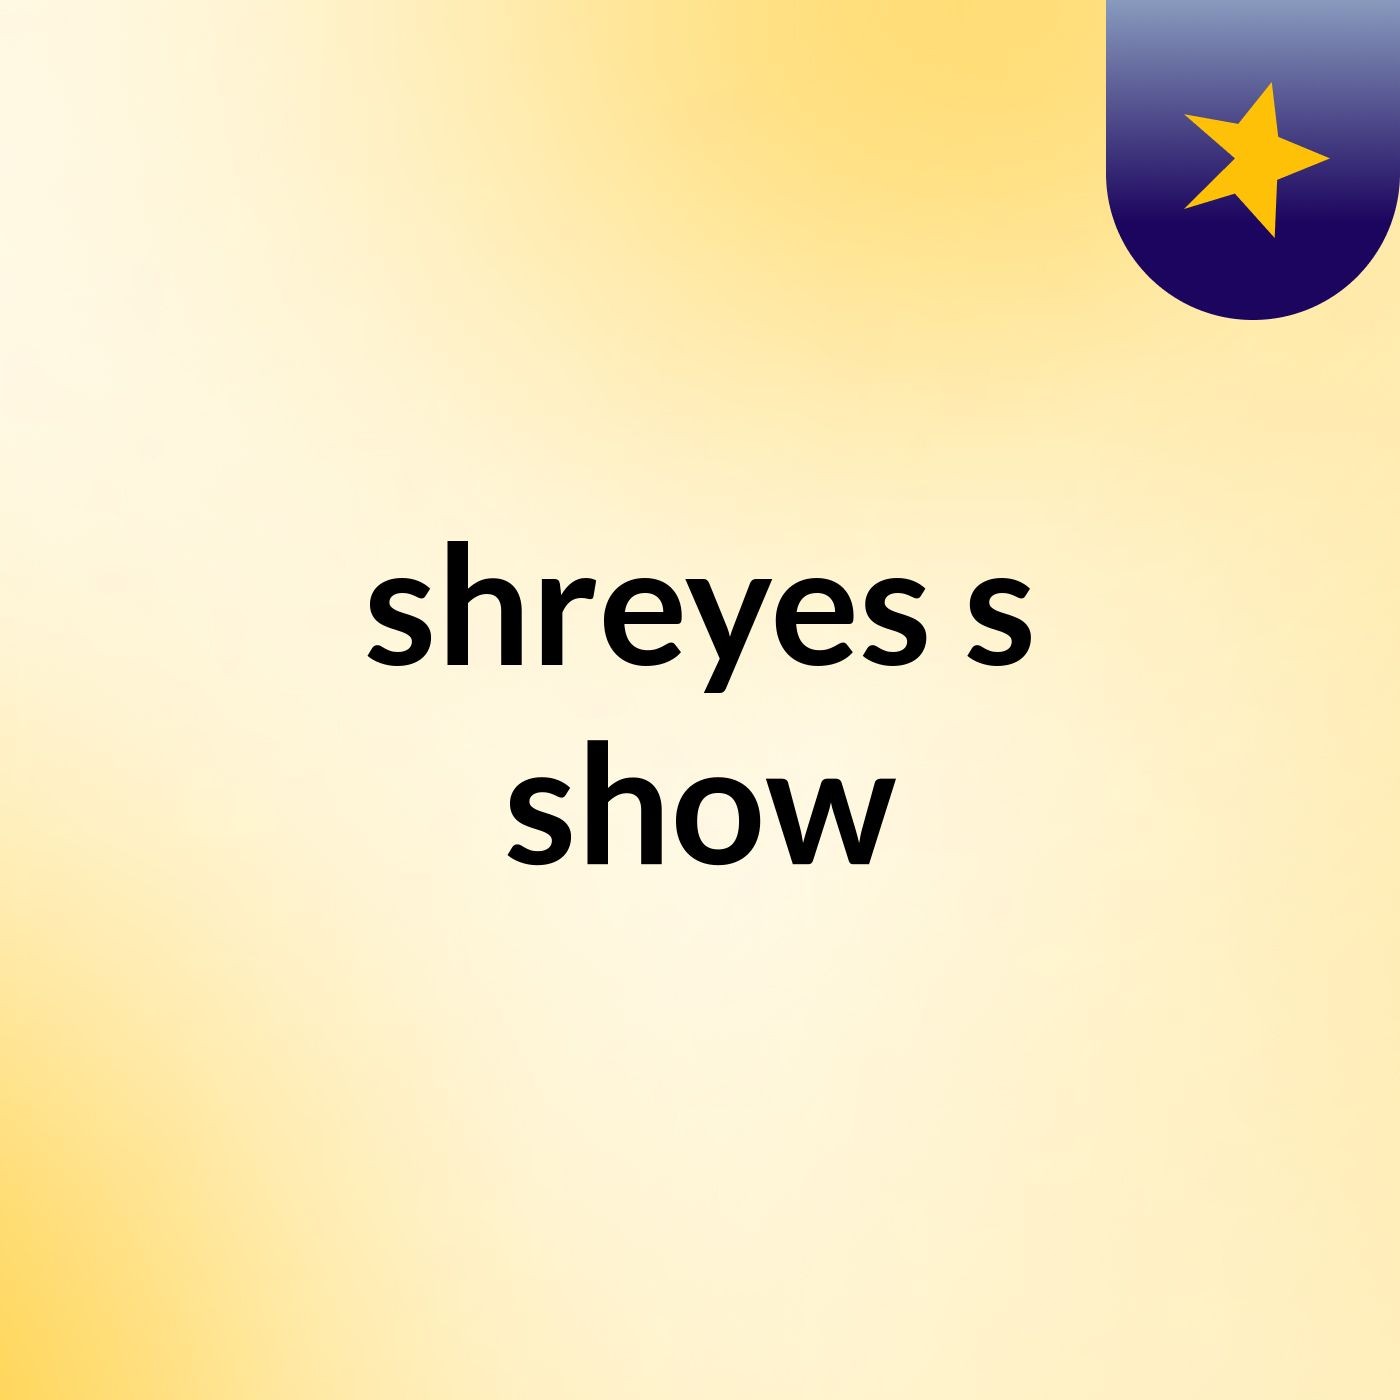 shreyes's show